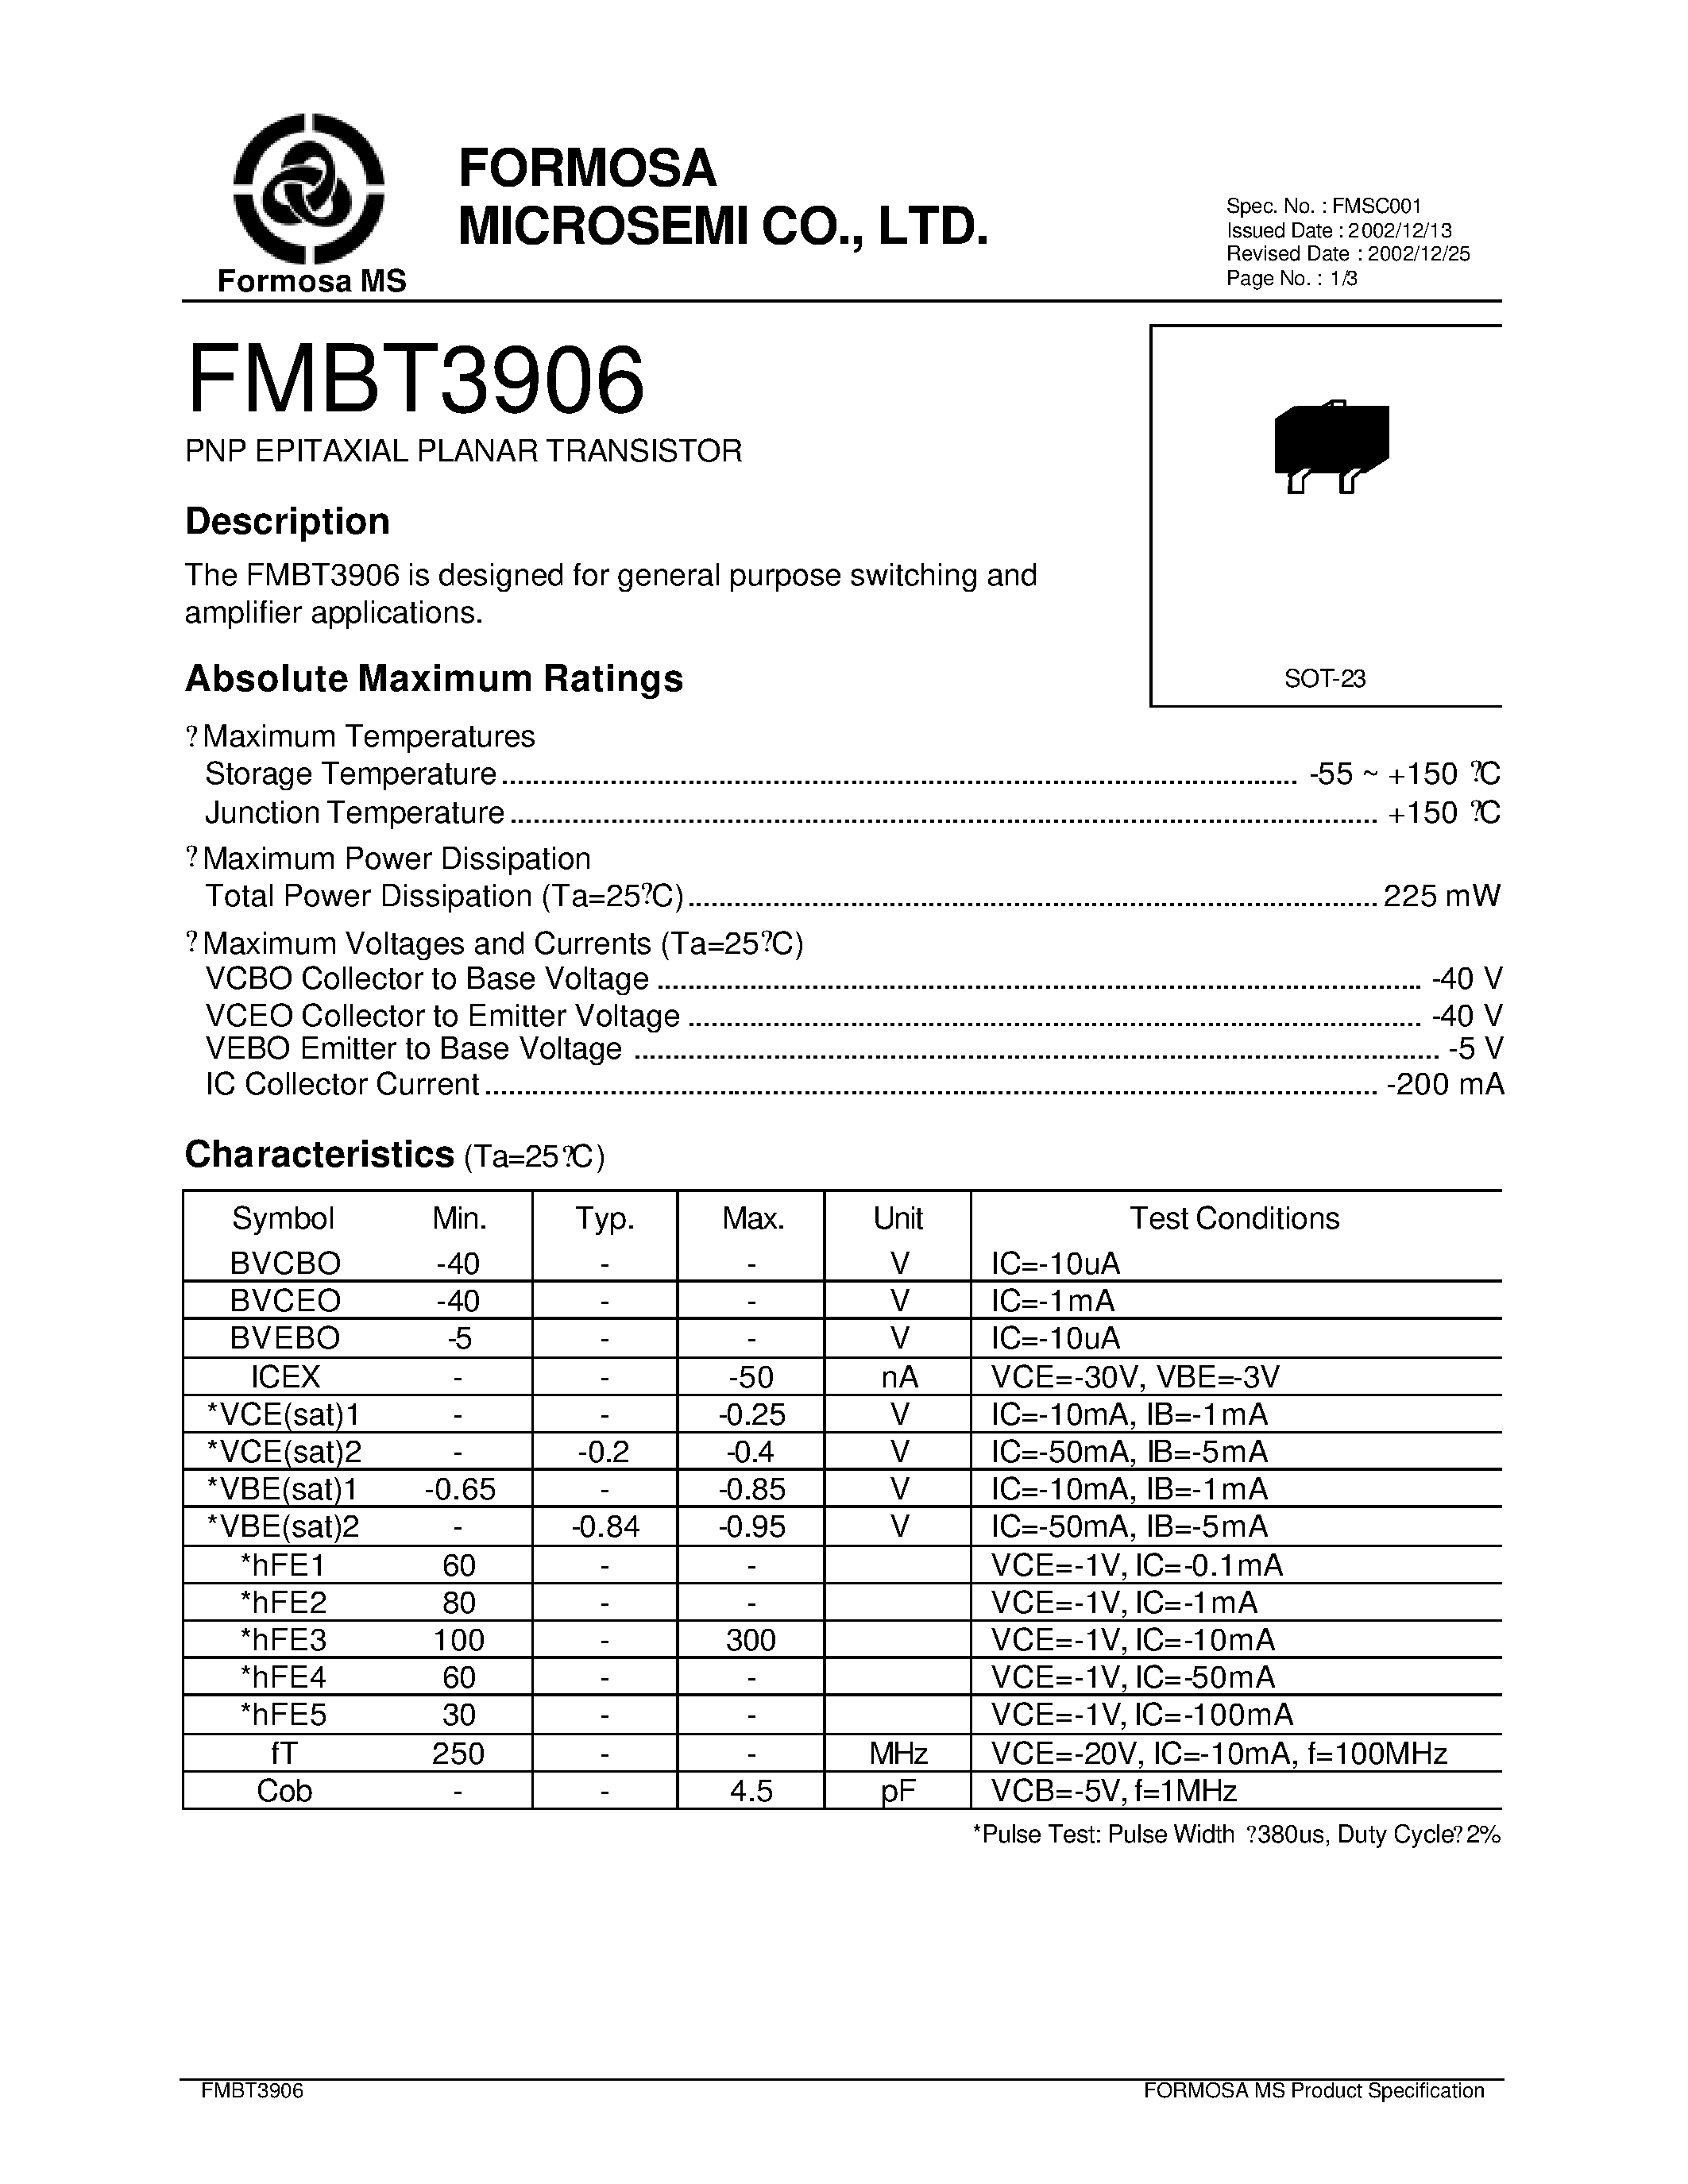 Datasheet FMBT3906 - PNP EPITAXIAL PLANAR TRANSISTOR page 1